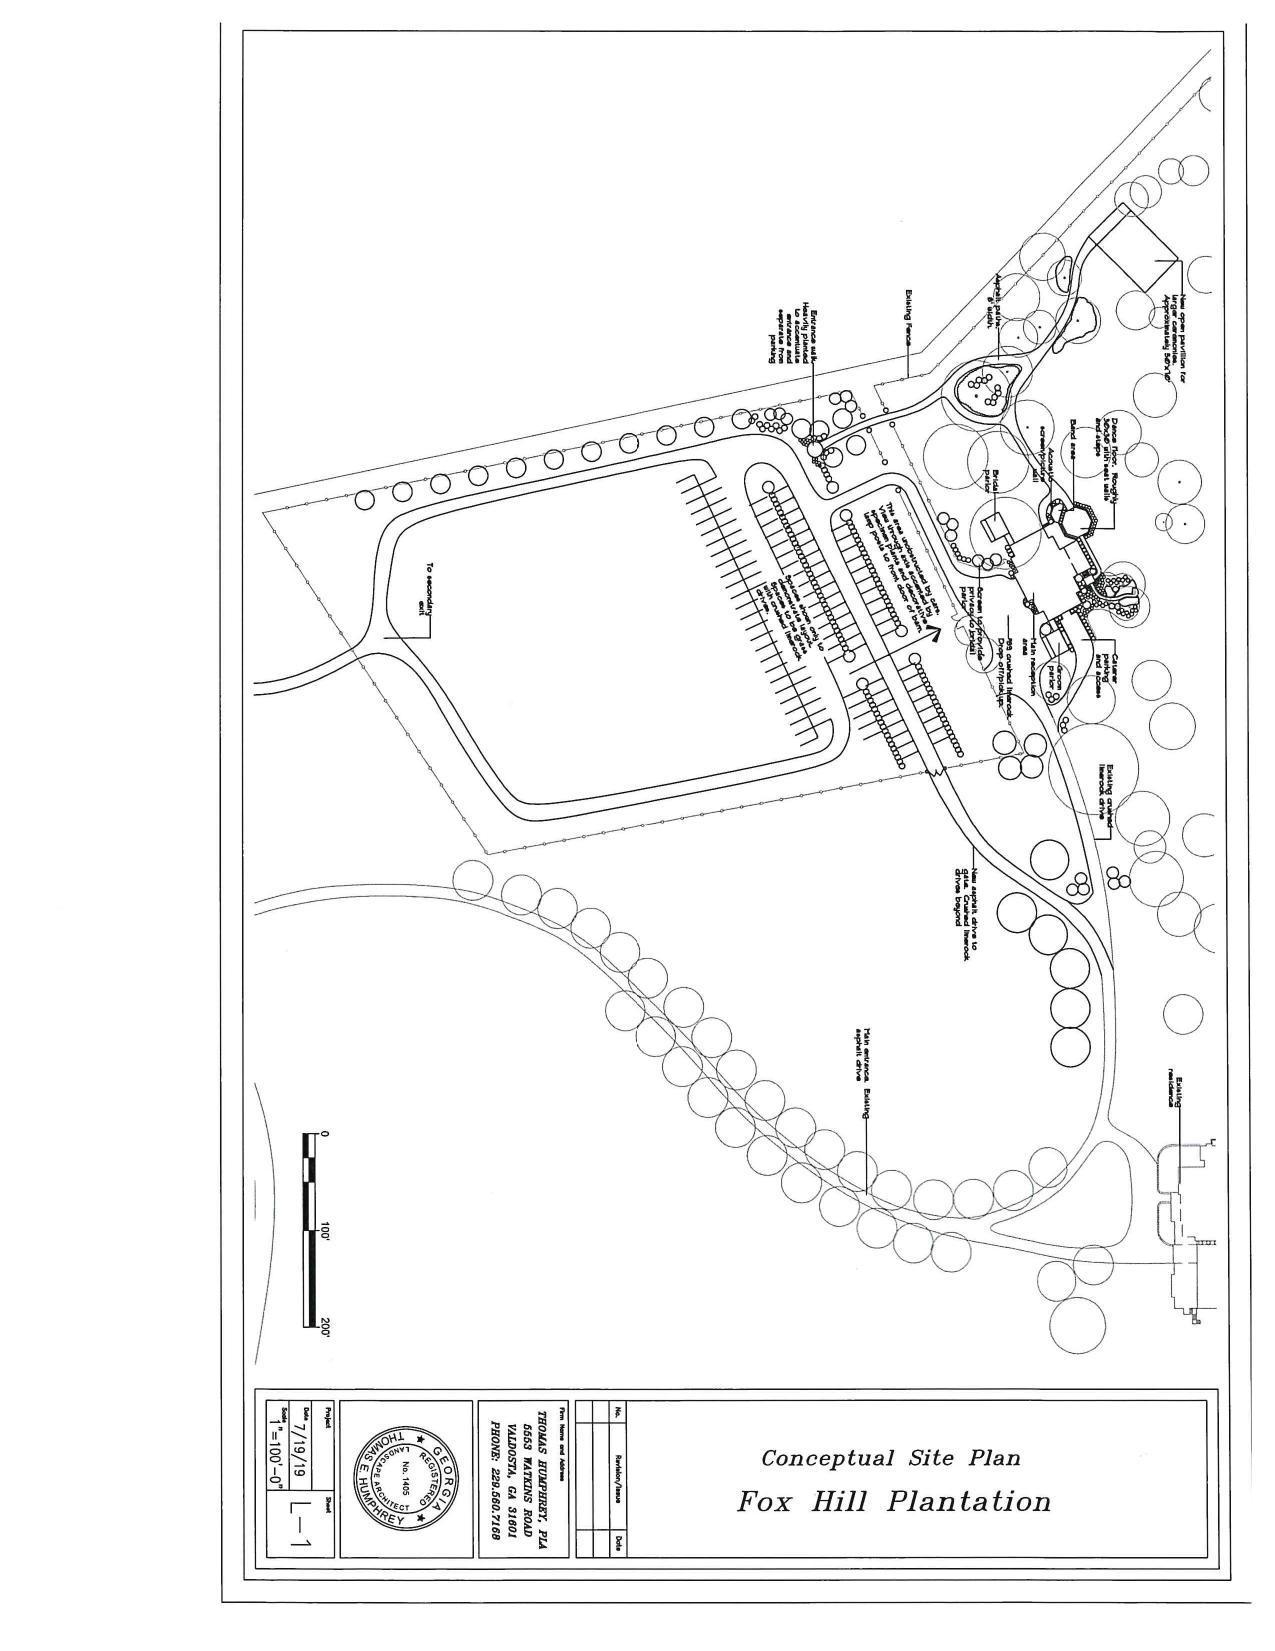 Conceptual Site Plan: Fox Hill Plantation